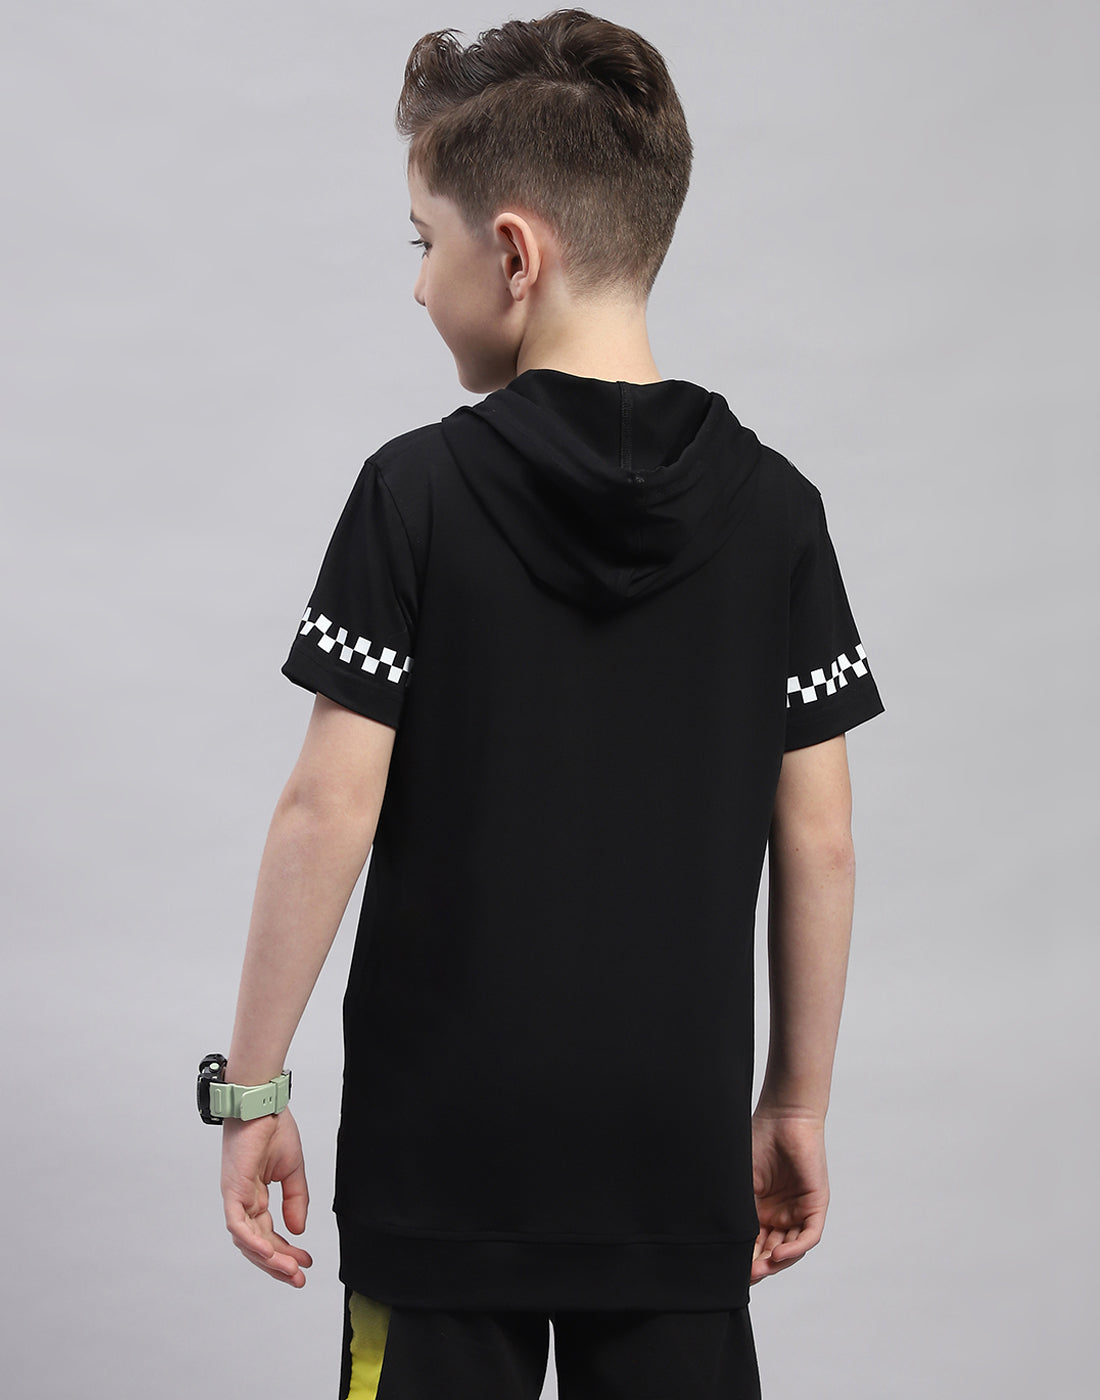 Boys Black Printed Hooded Half Sleeve T-Shirt